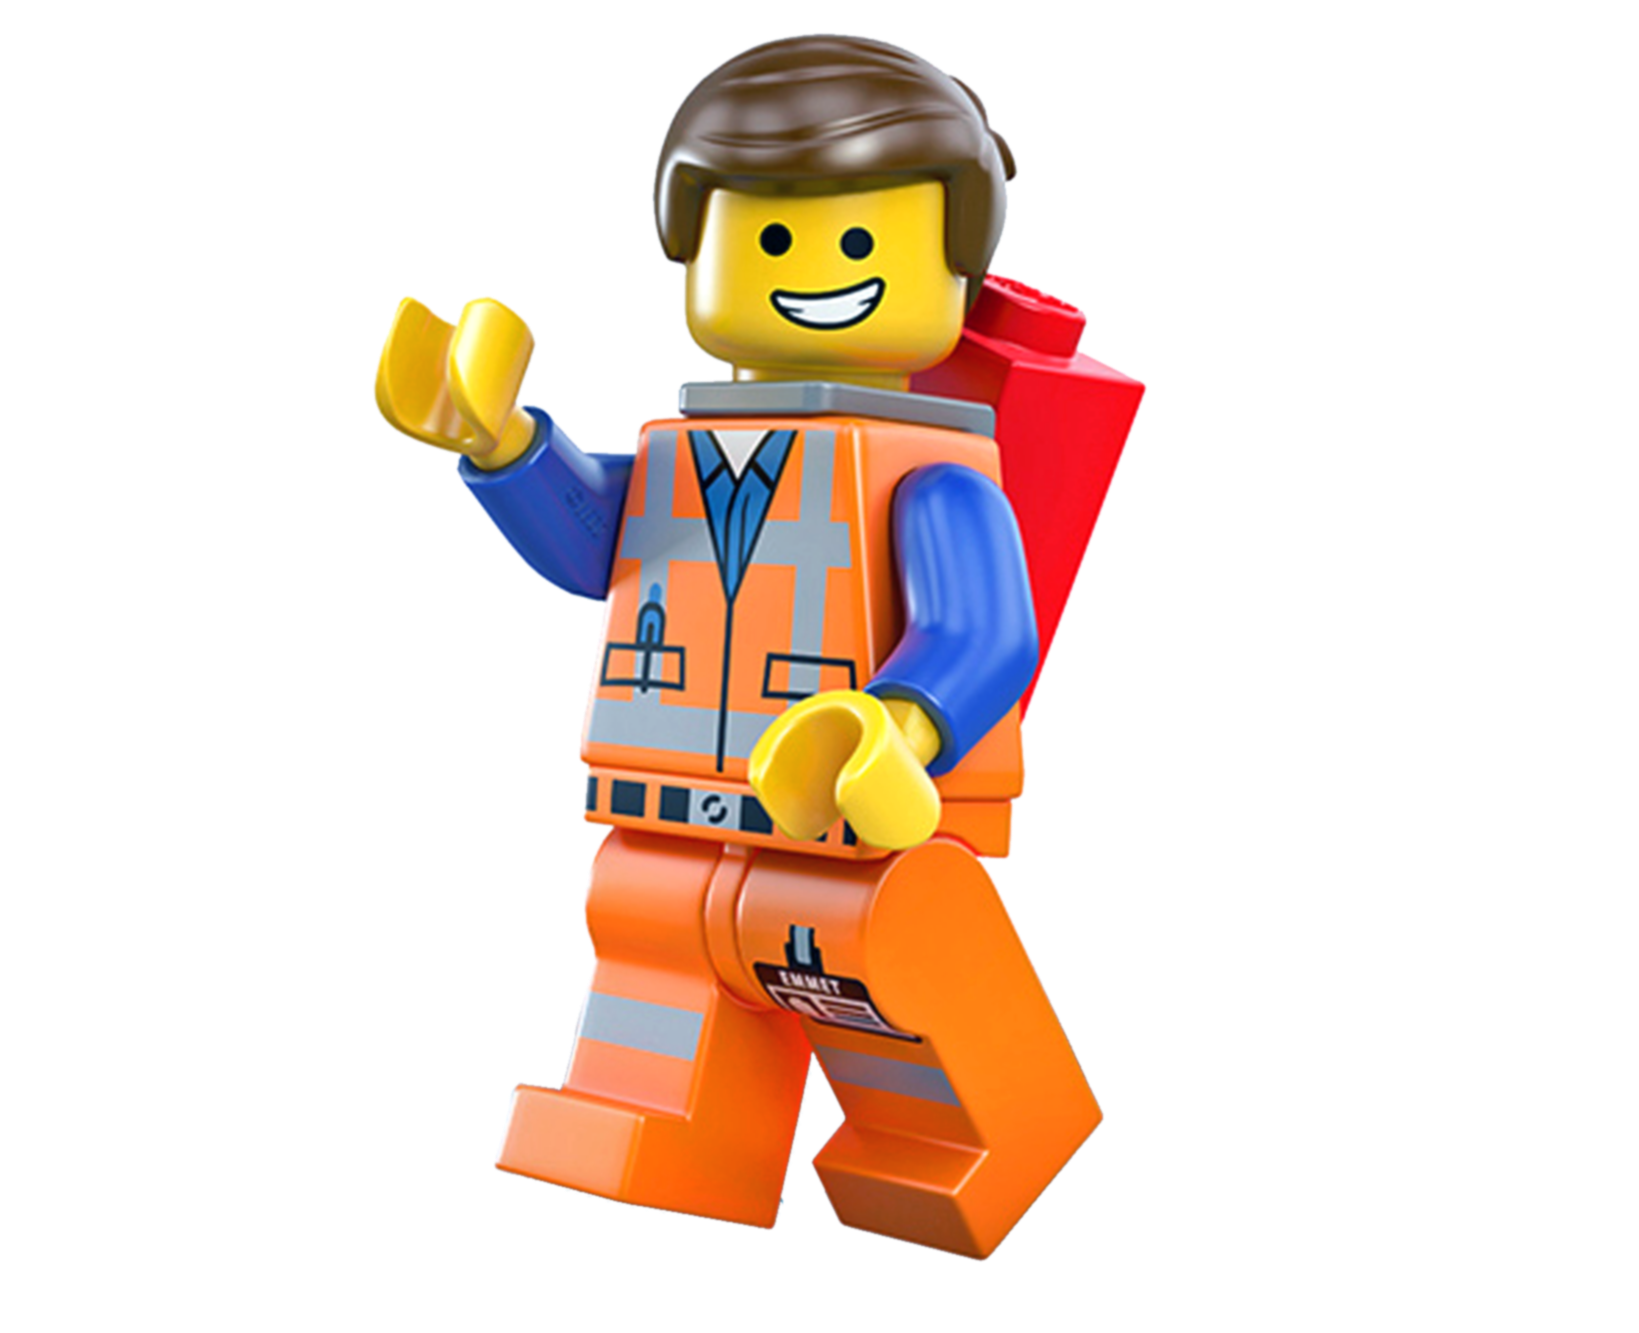 Lego guy waving